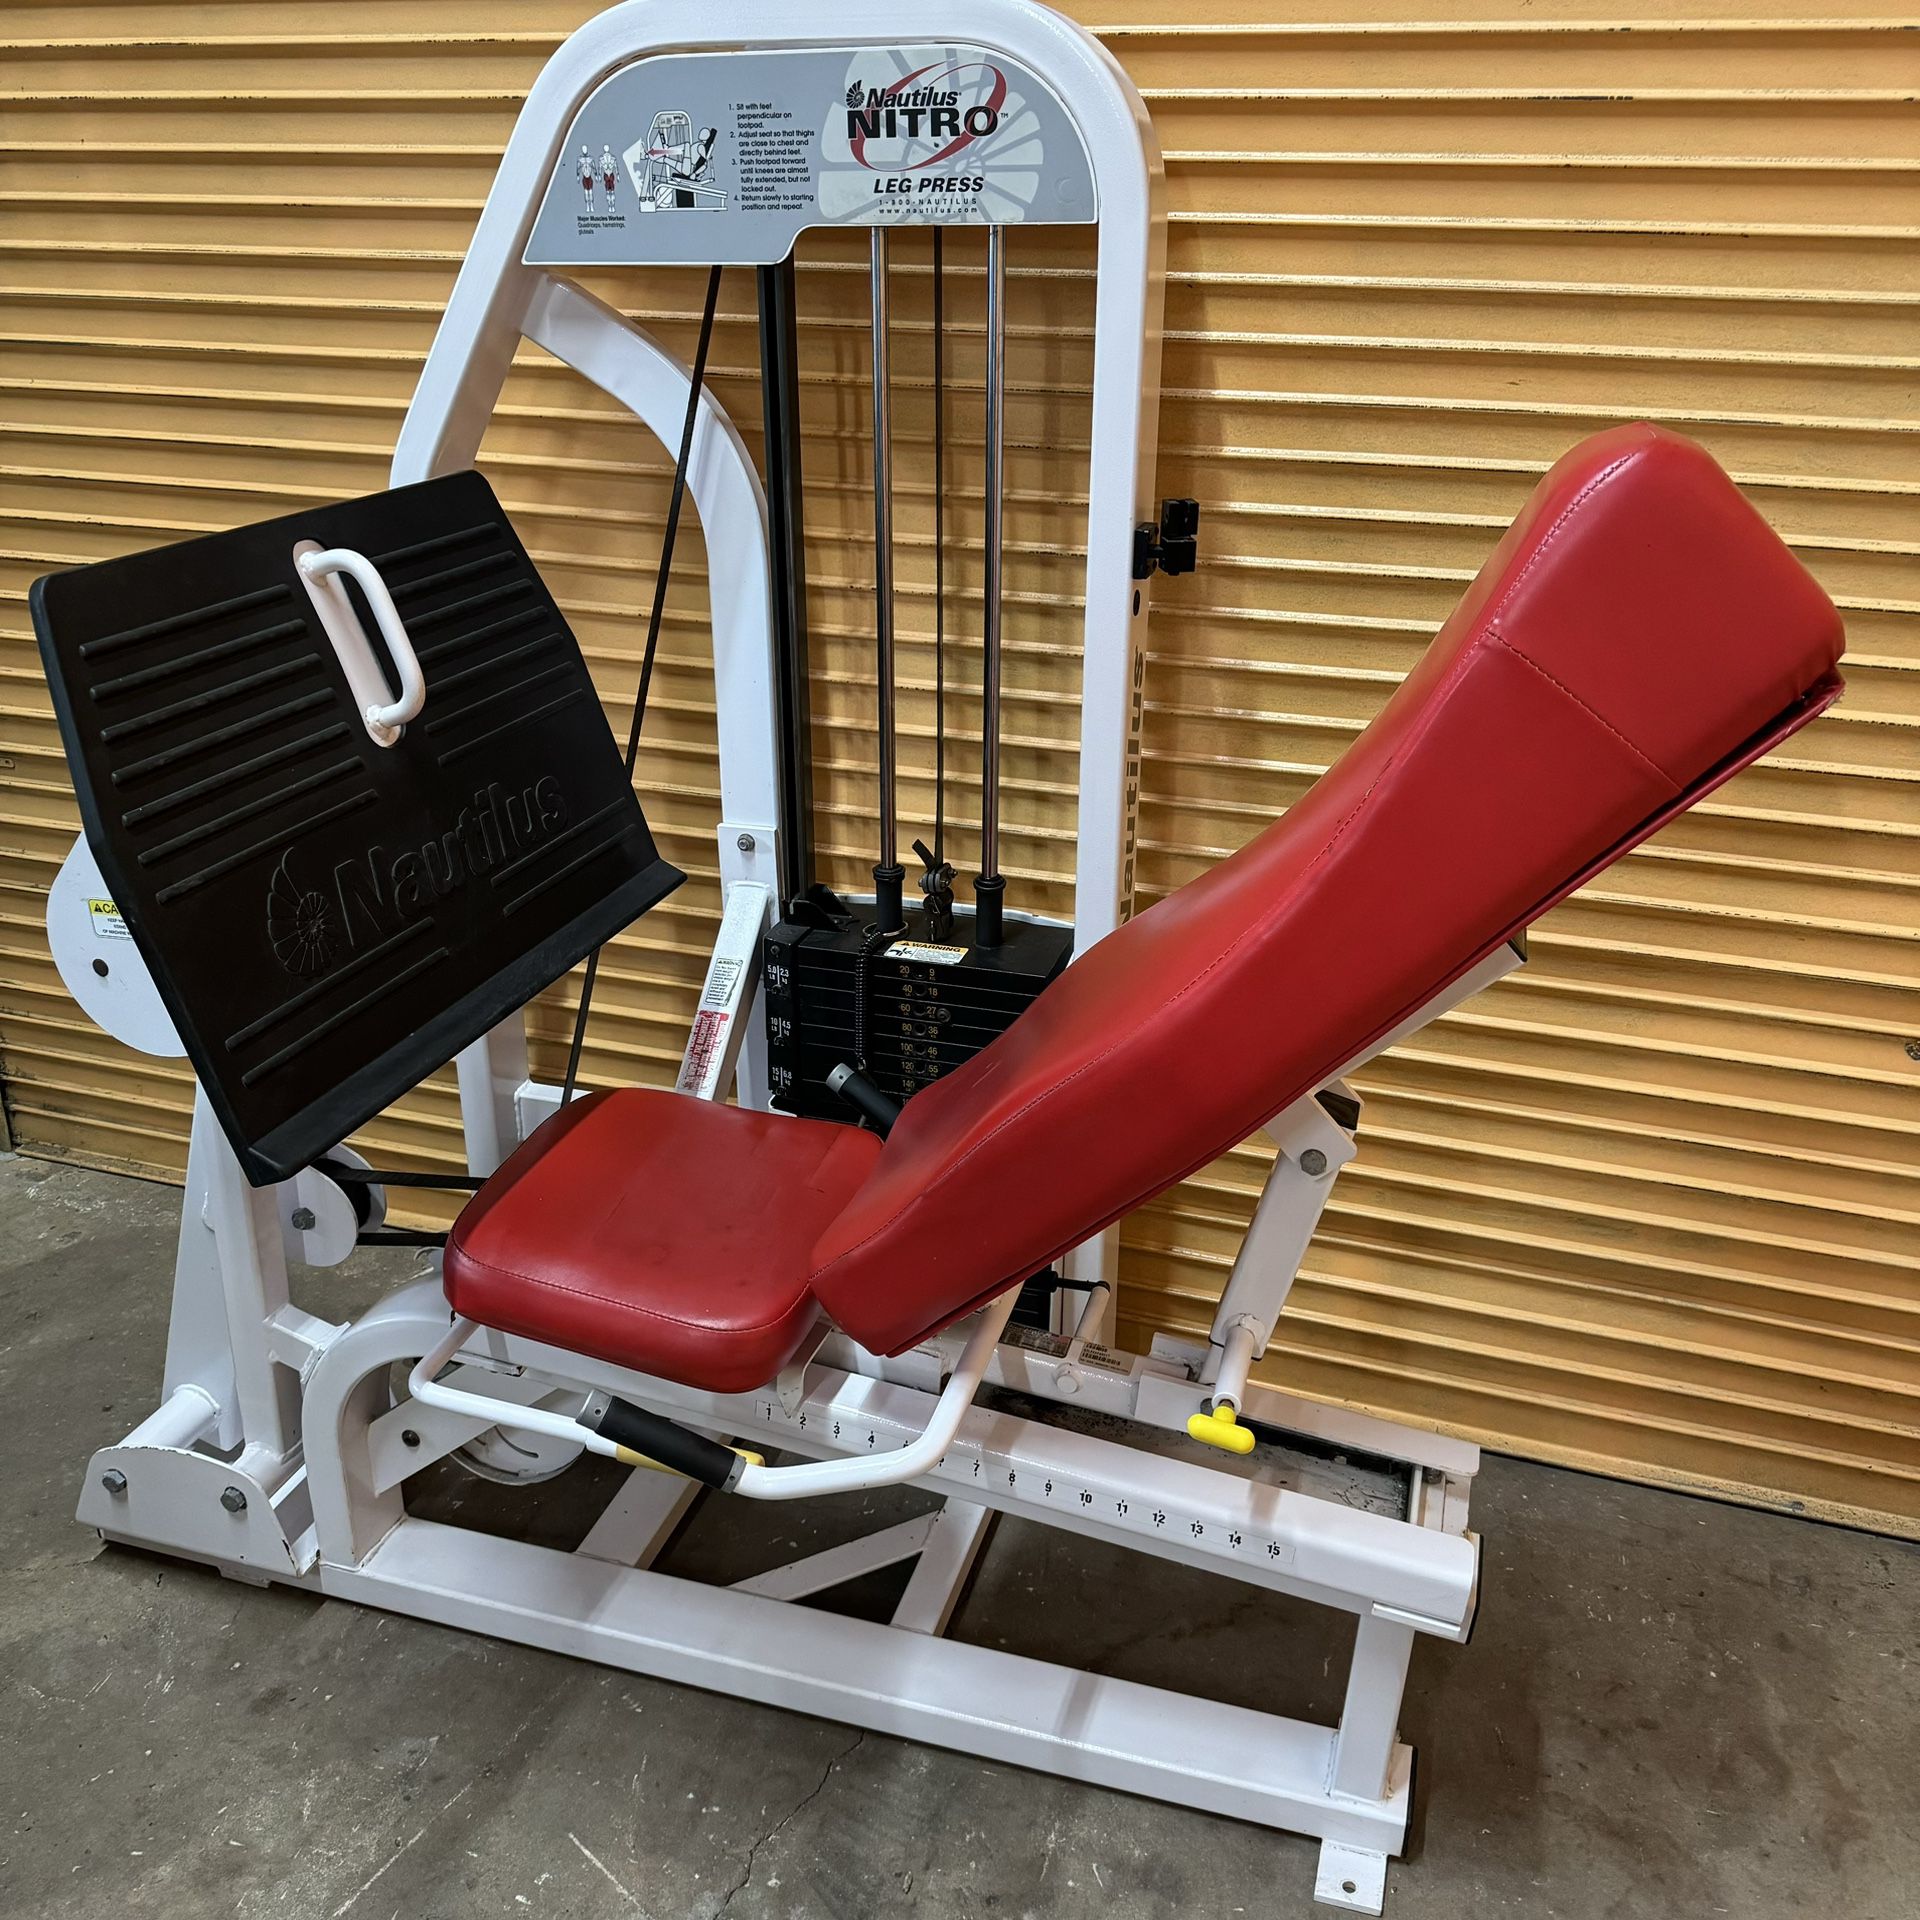 Nautilus Nitro Leg Press - 500 Lb Weight Stack- Commercial Gym Equipment 